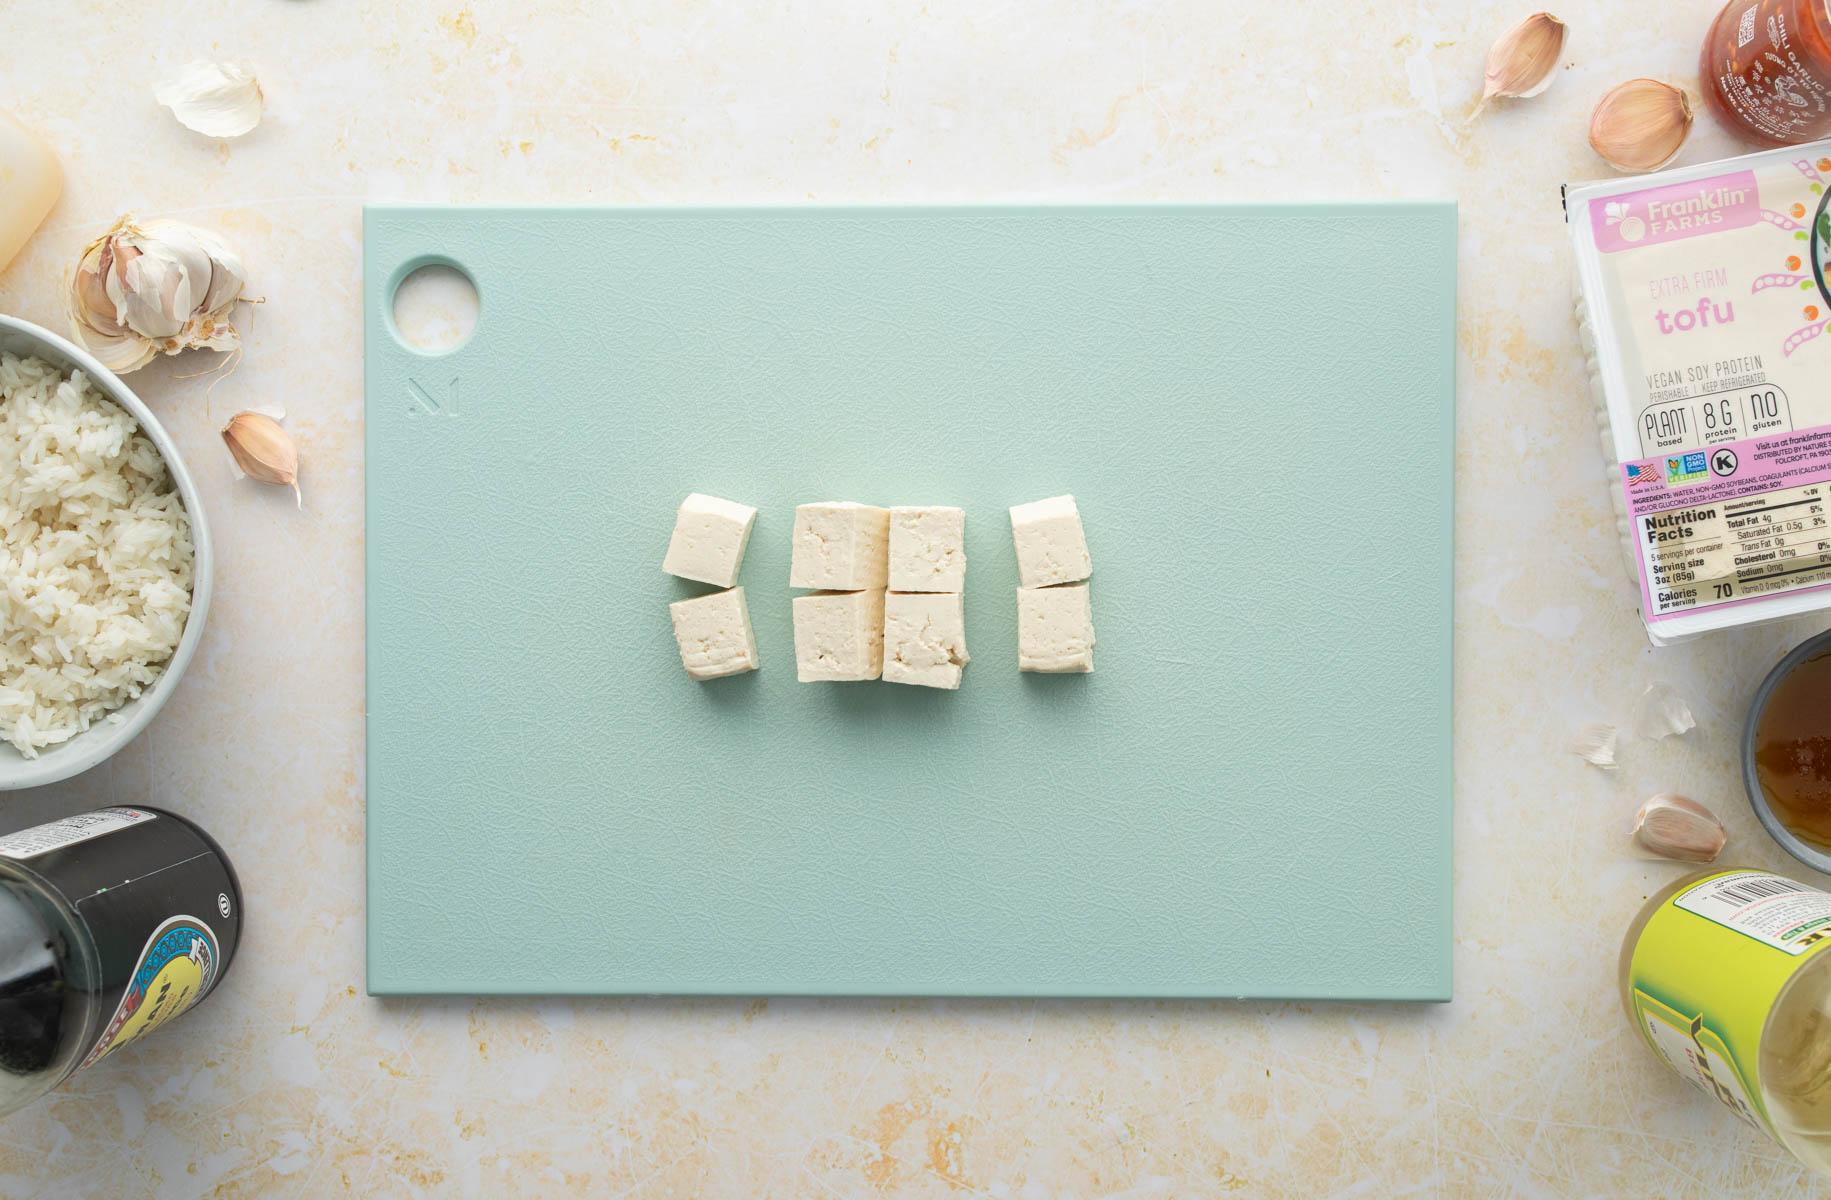 cubed tofu on blue cutting board